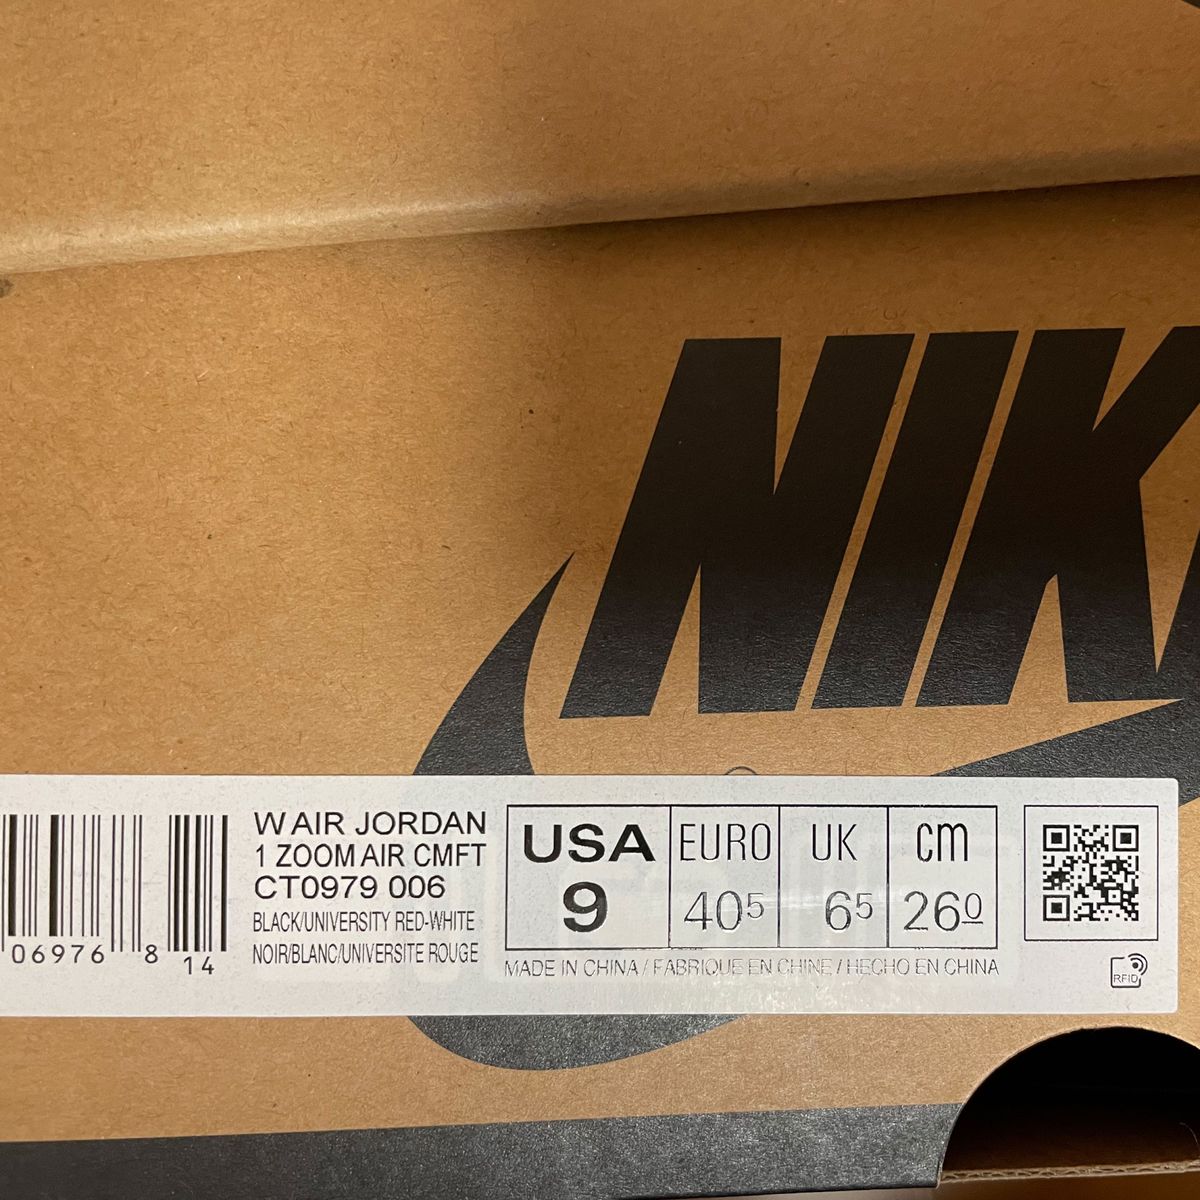 Nike WMNS Air Jordan 1 High Zoom Air Comfort "Bred"